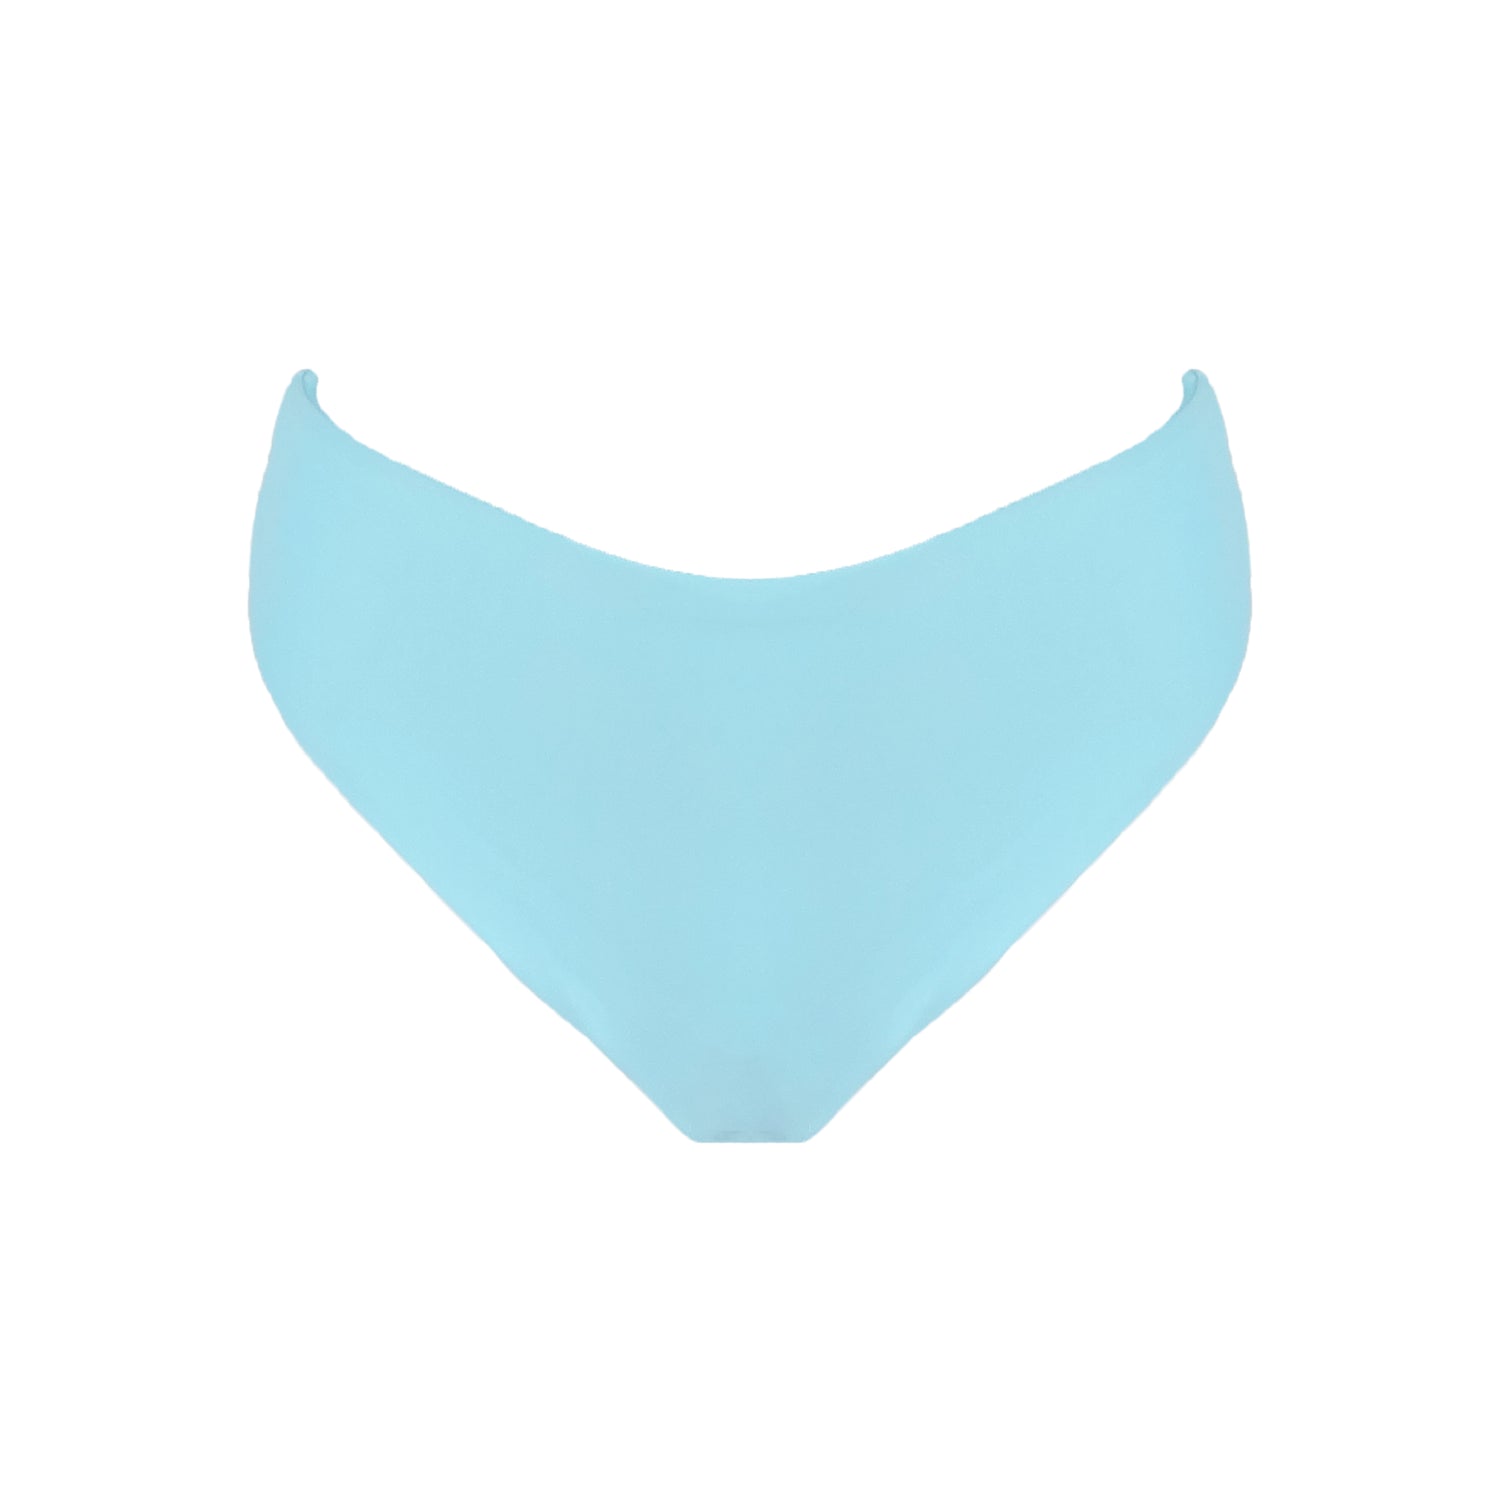 Ocean blue high waist cheeky bikini bottom with high cut legs, shapewear benefits, and full bum coverage.